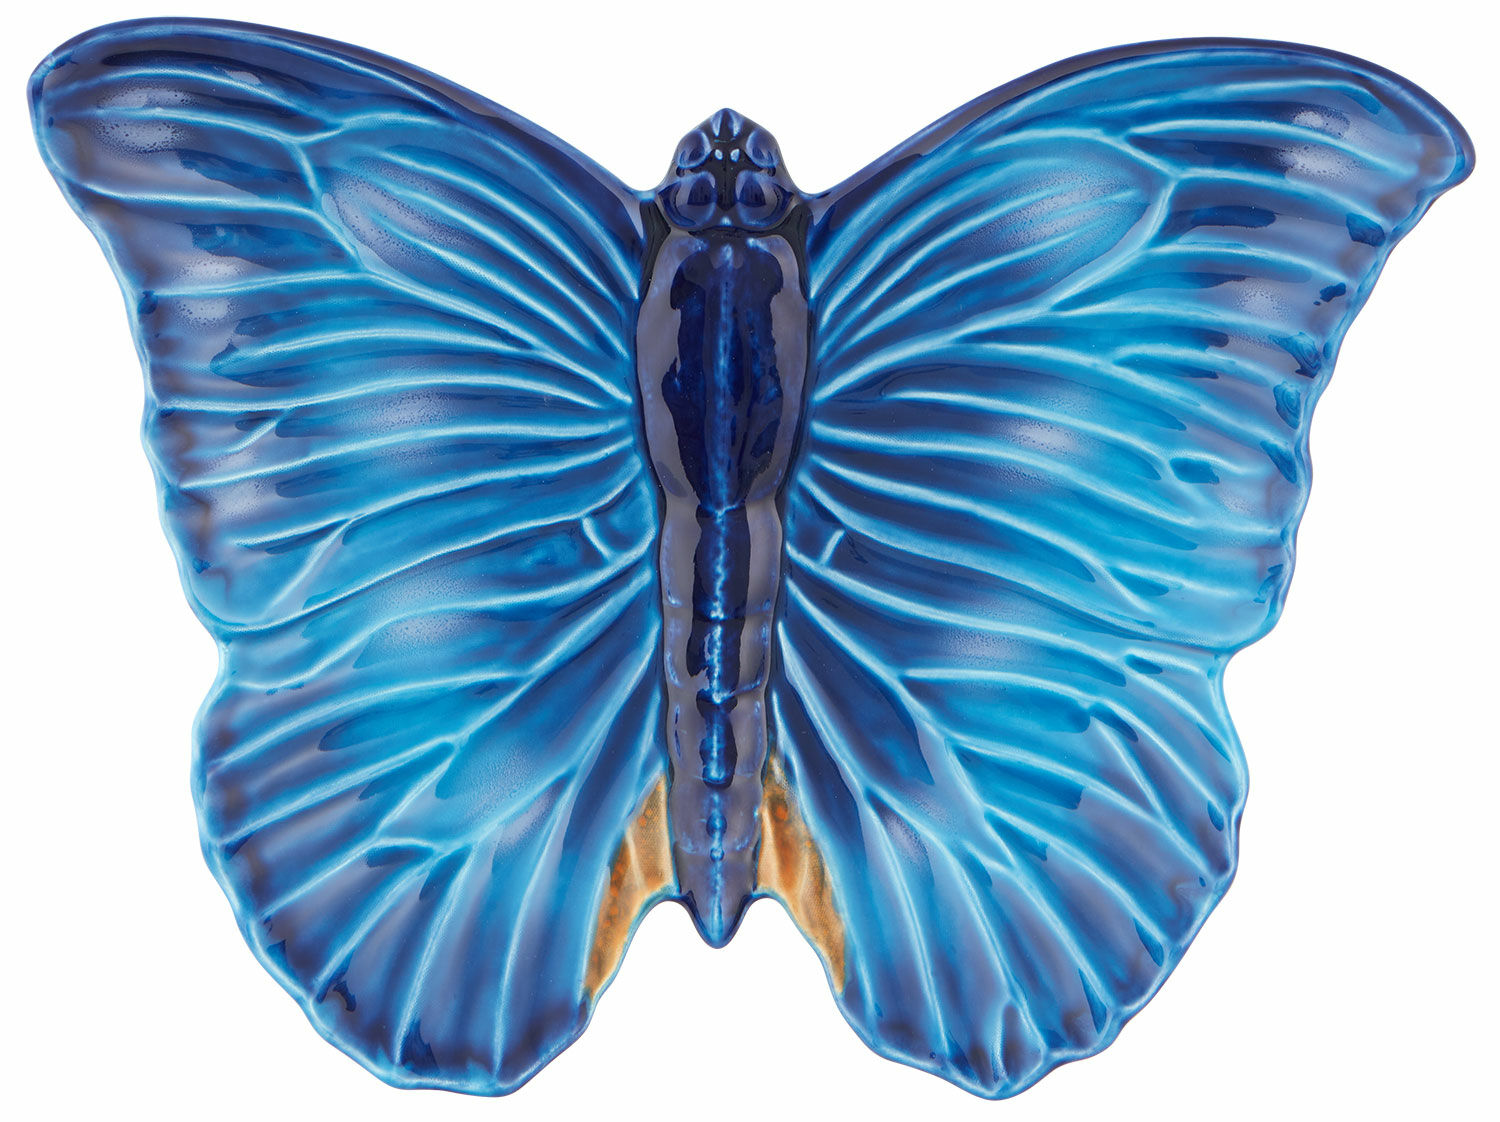 Bowl "Cloudy Butterflys" - Design Claudia Schiffer by Vista Alegre